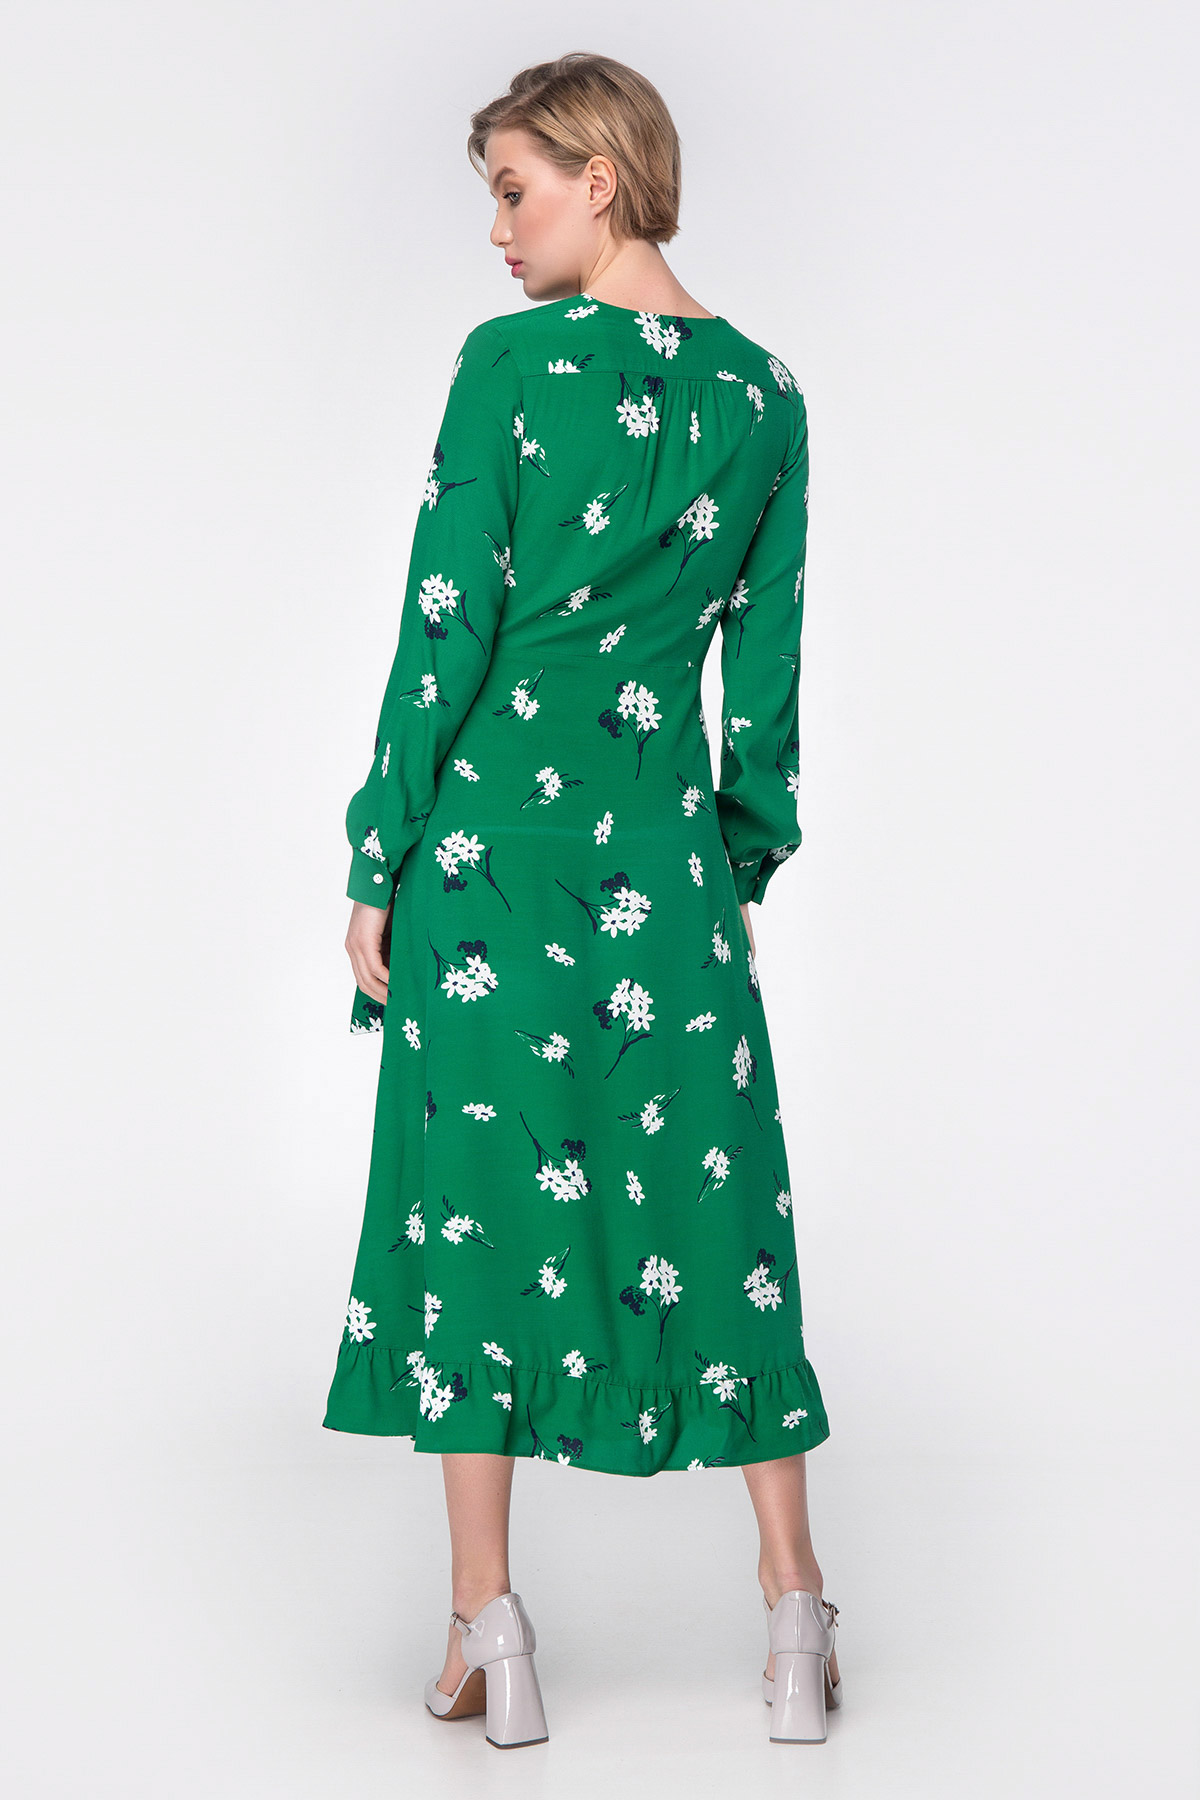 Green wrap mini dress with floral print, photo 7